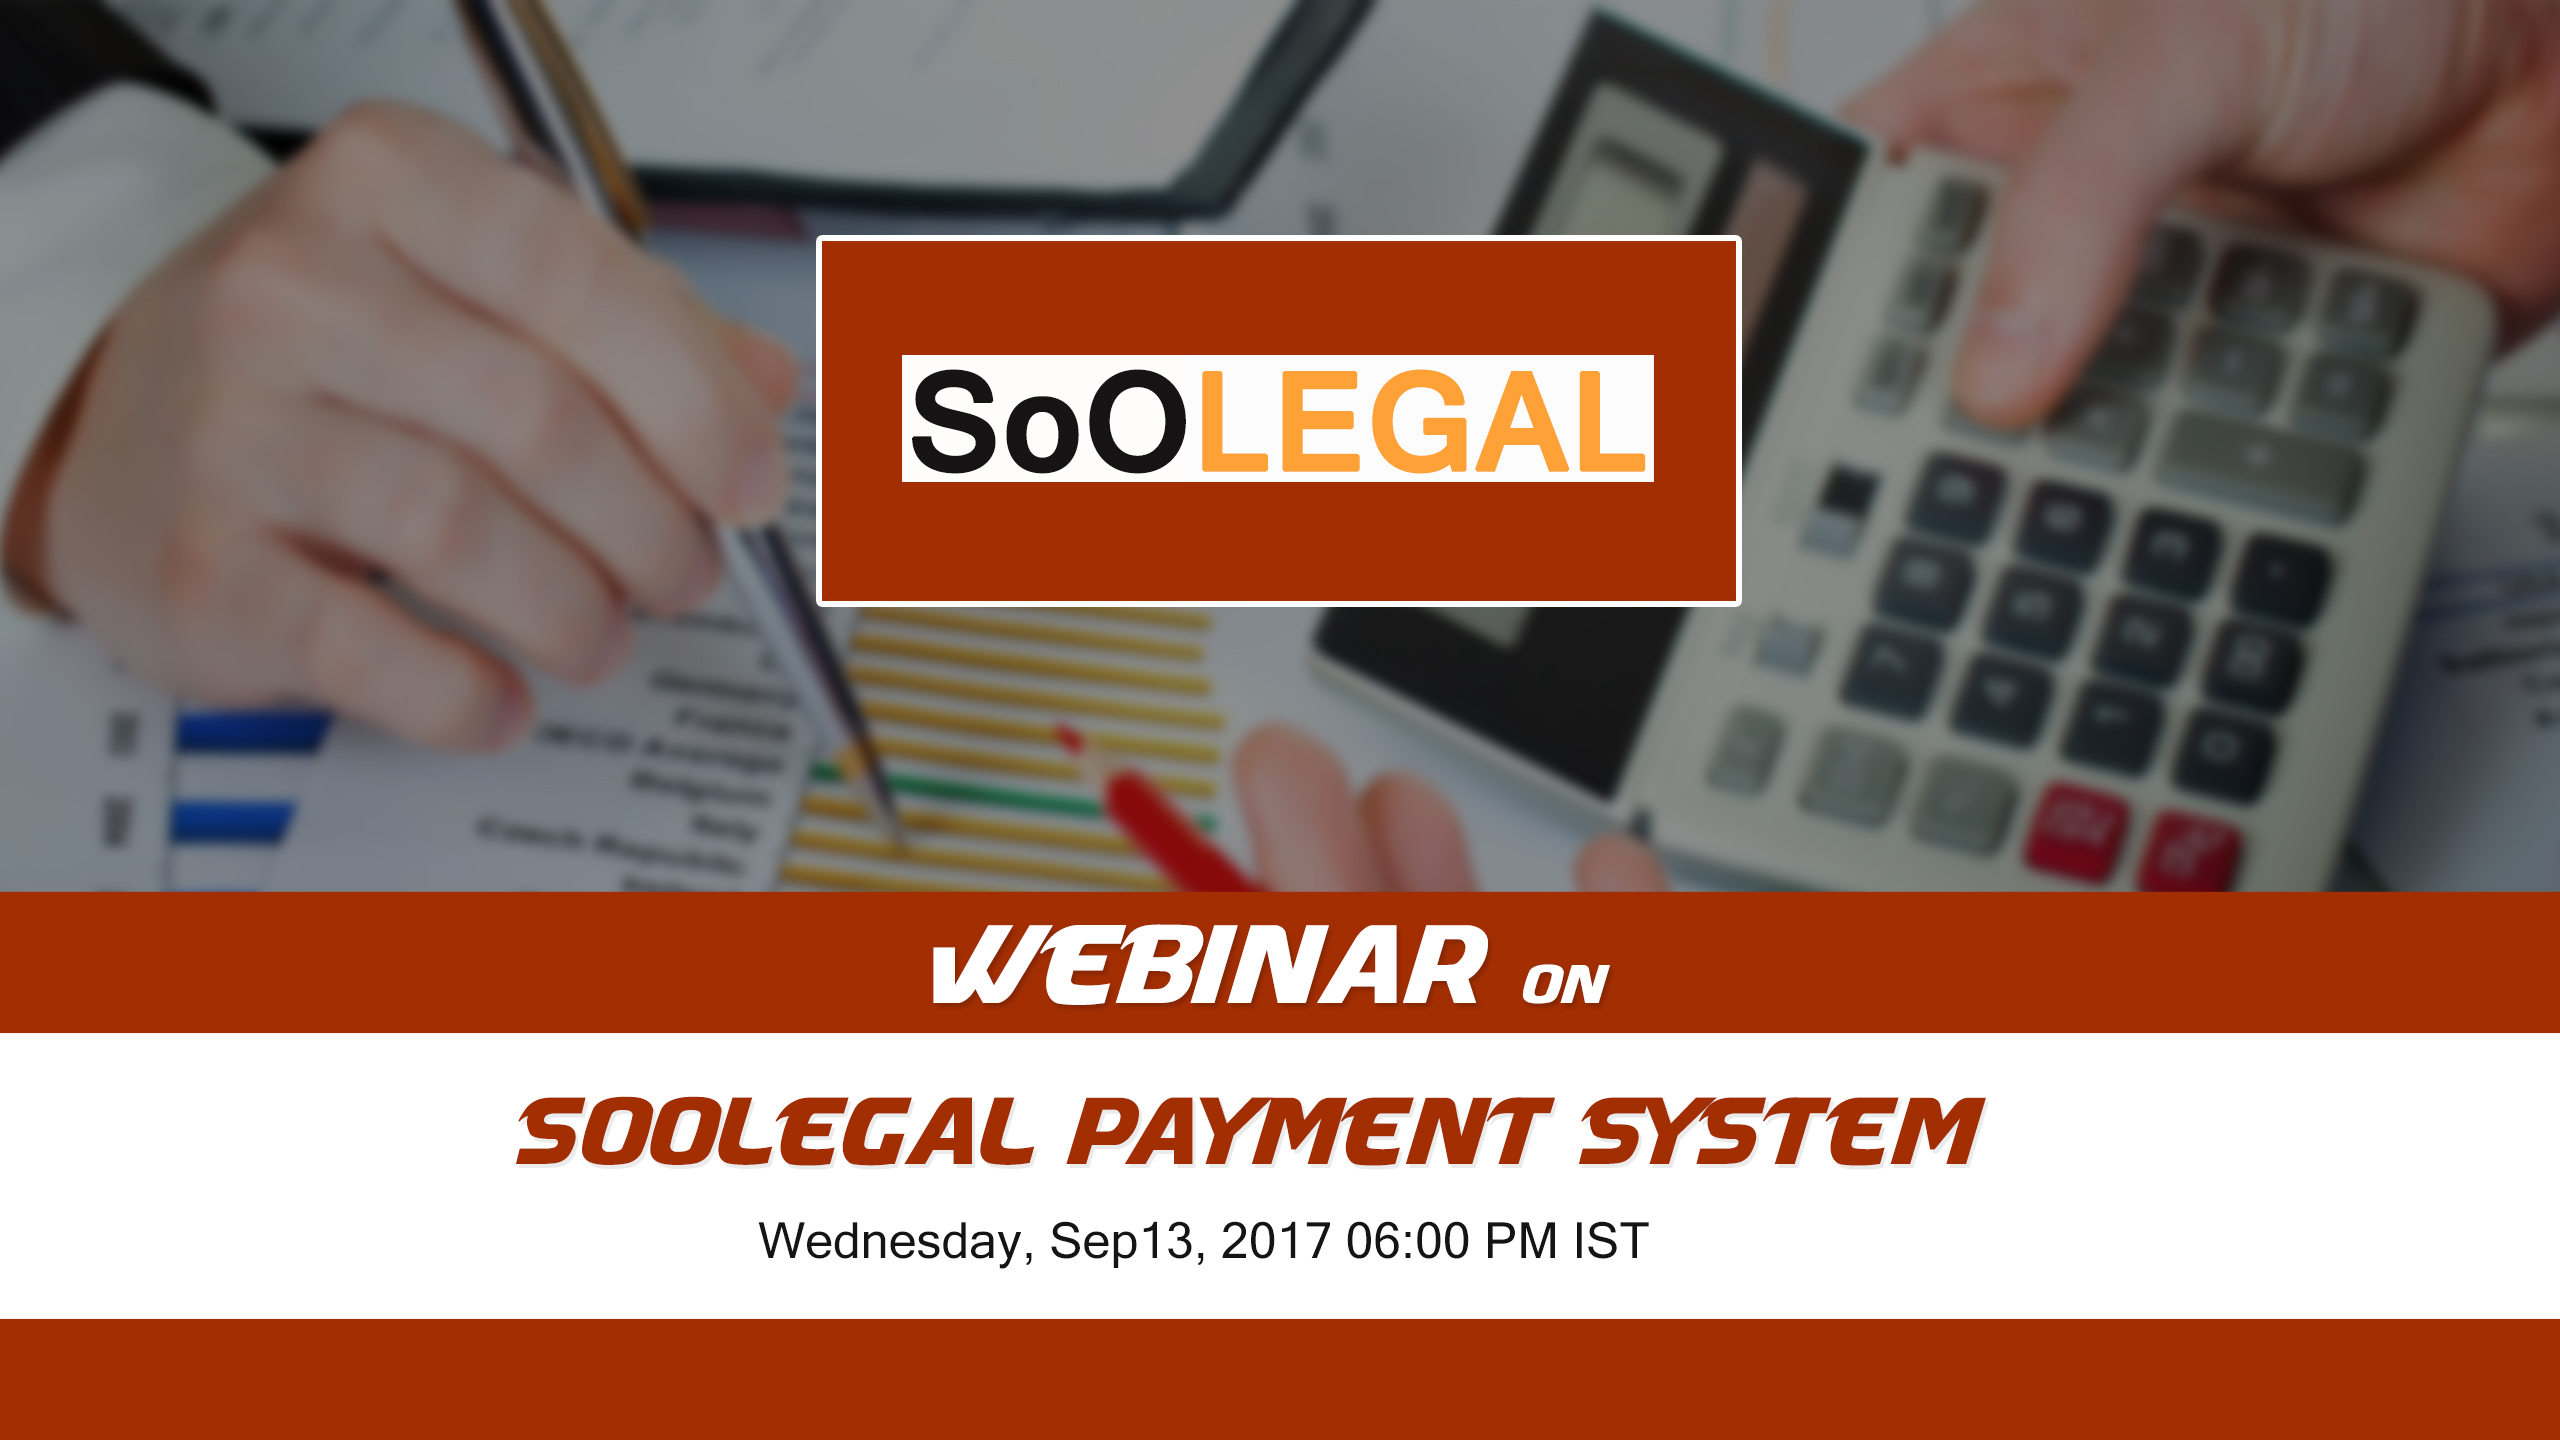 Online Workshop on Digital Payment System for Lawyers